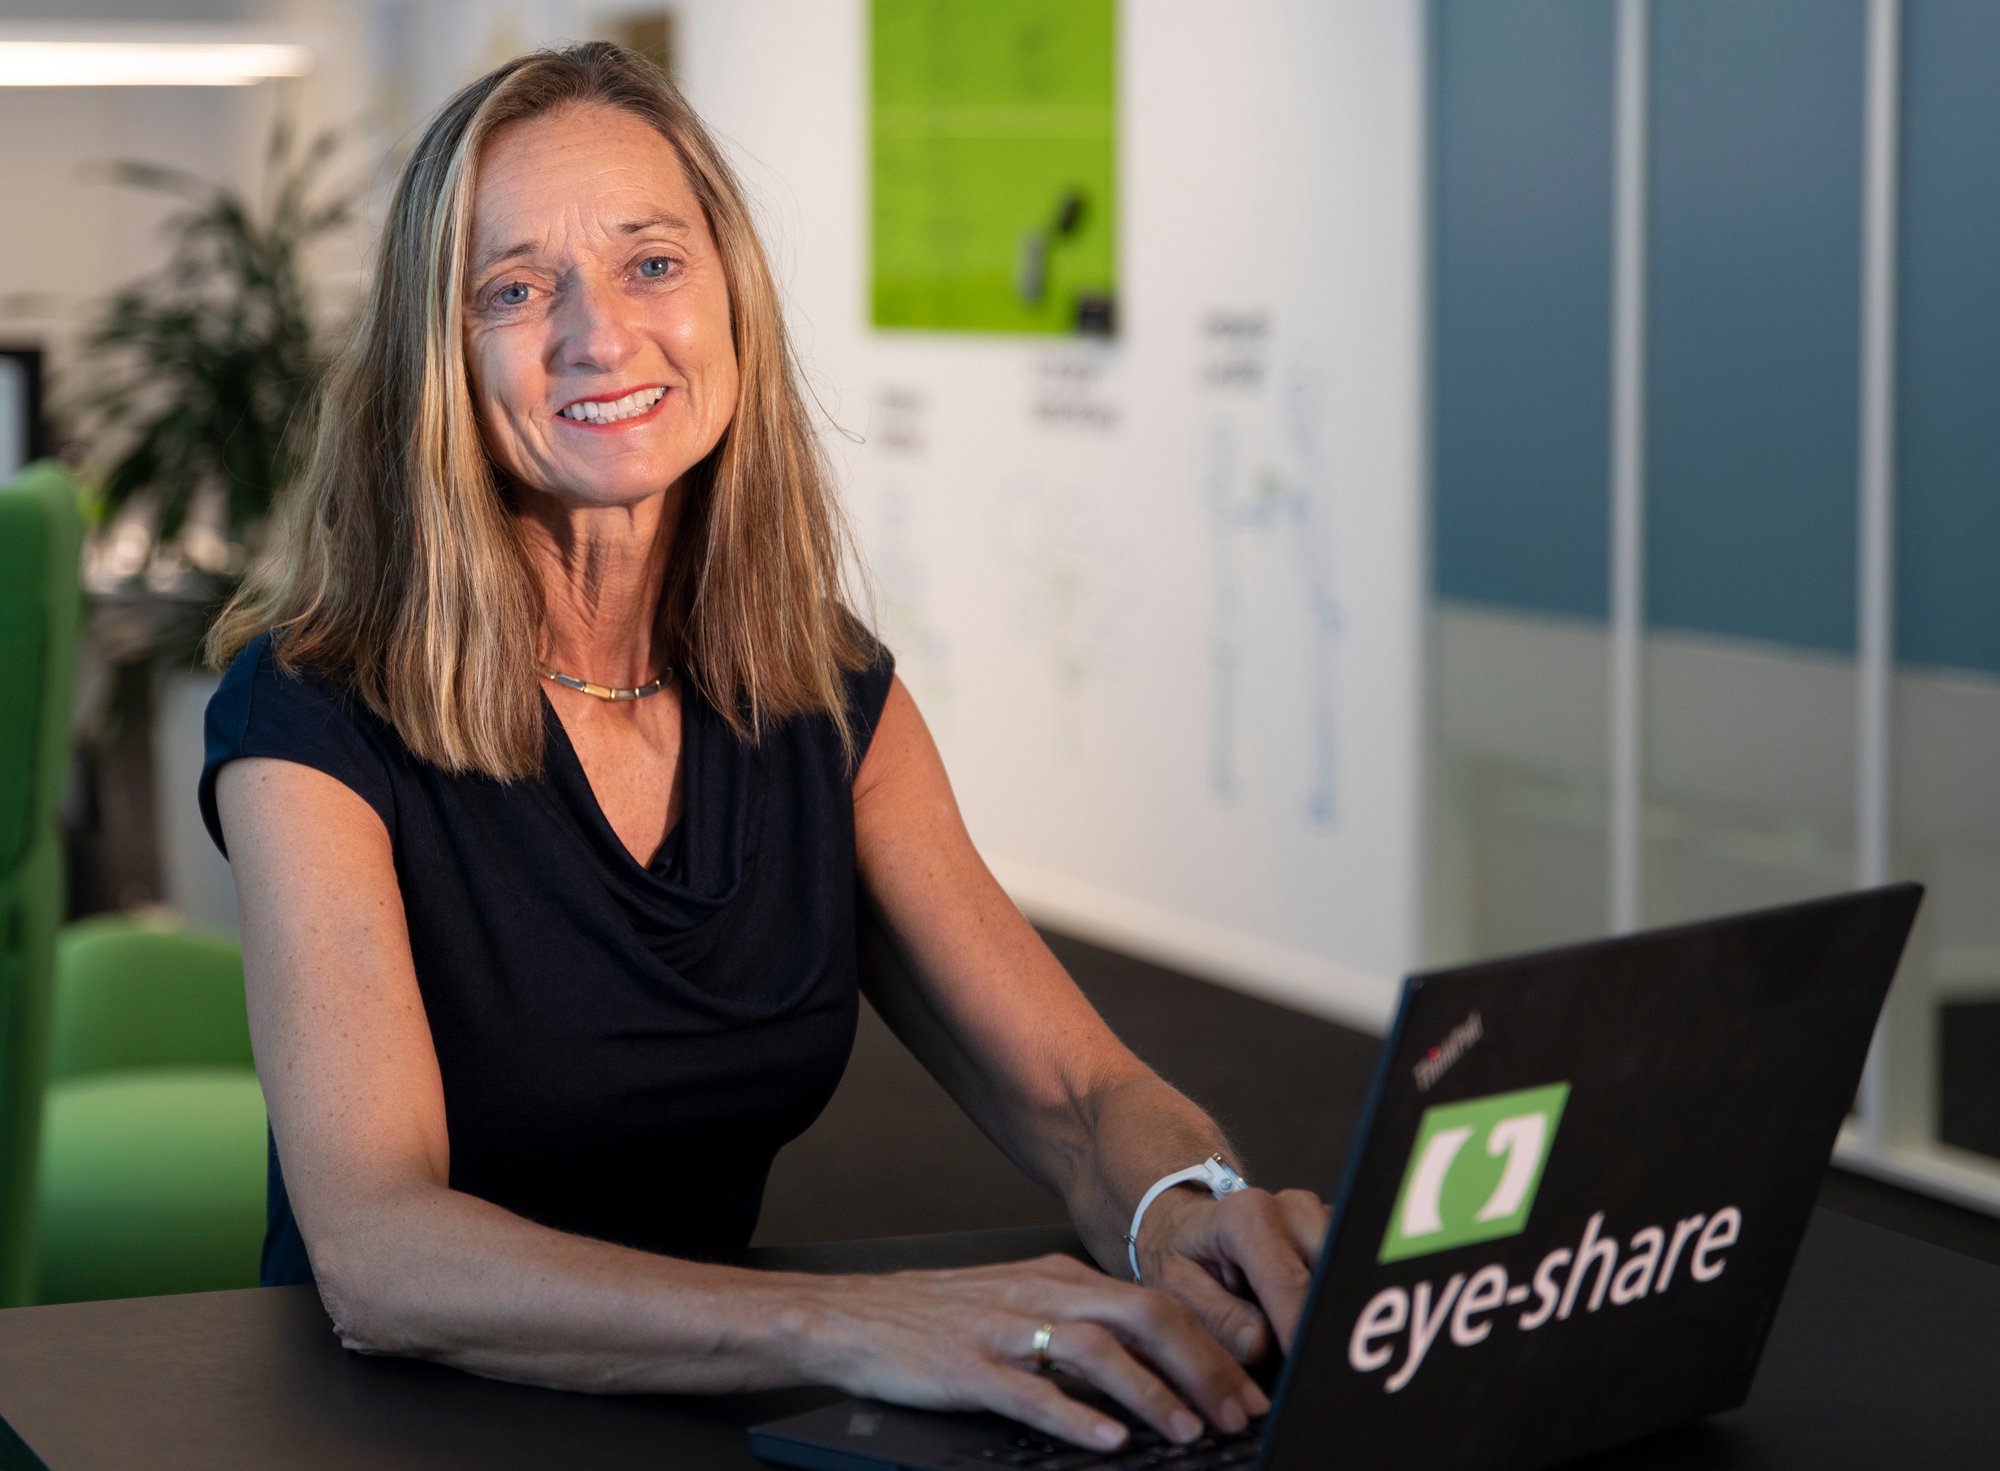 Torhill Falnes CEO at Eye-share